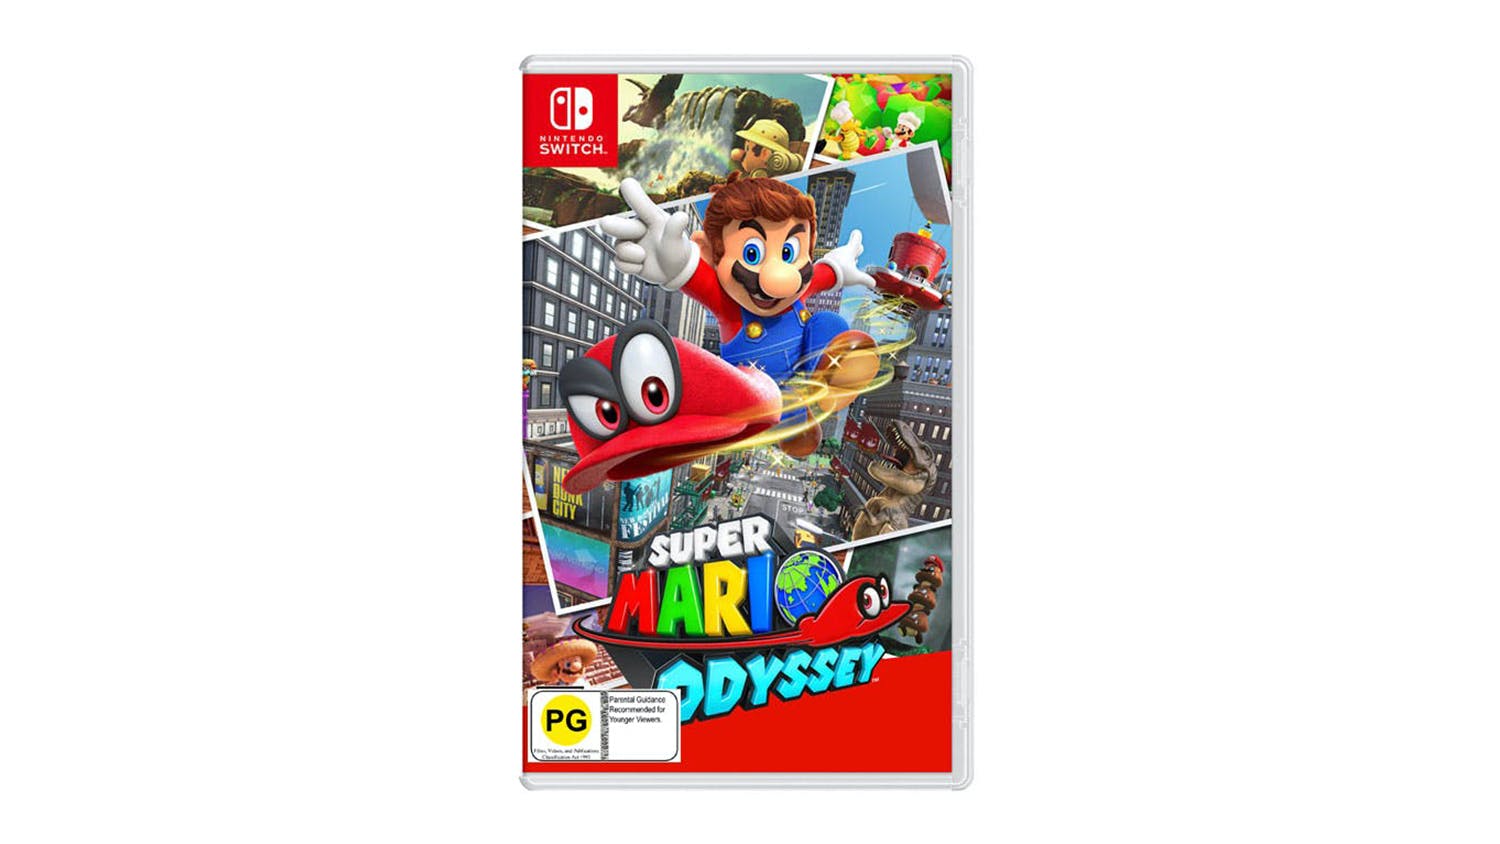 Nintendo Switch - Super Mario Odyssey (PG) | Harvey Norman New Zealand